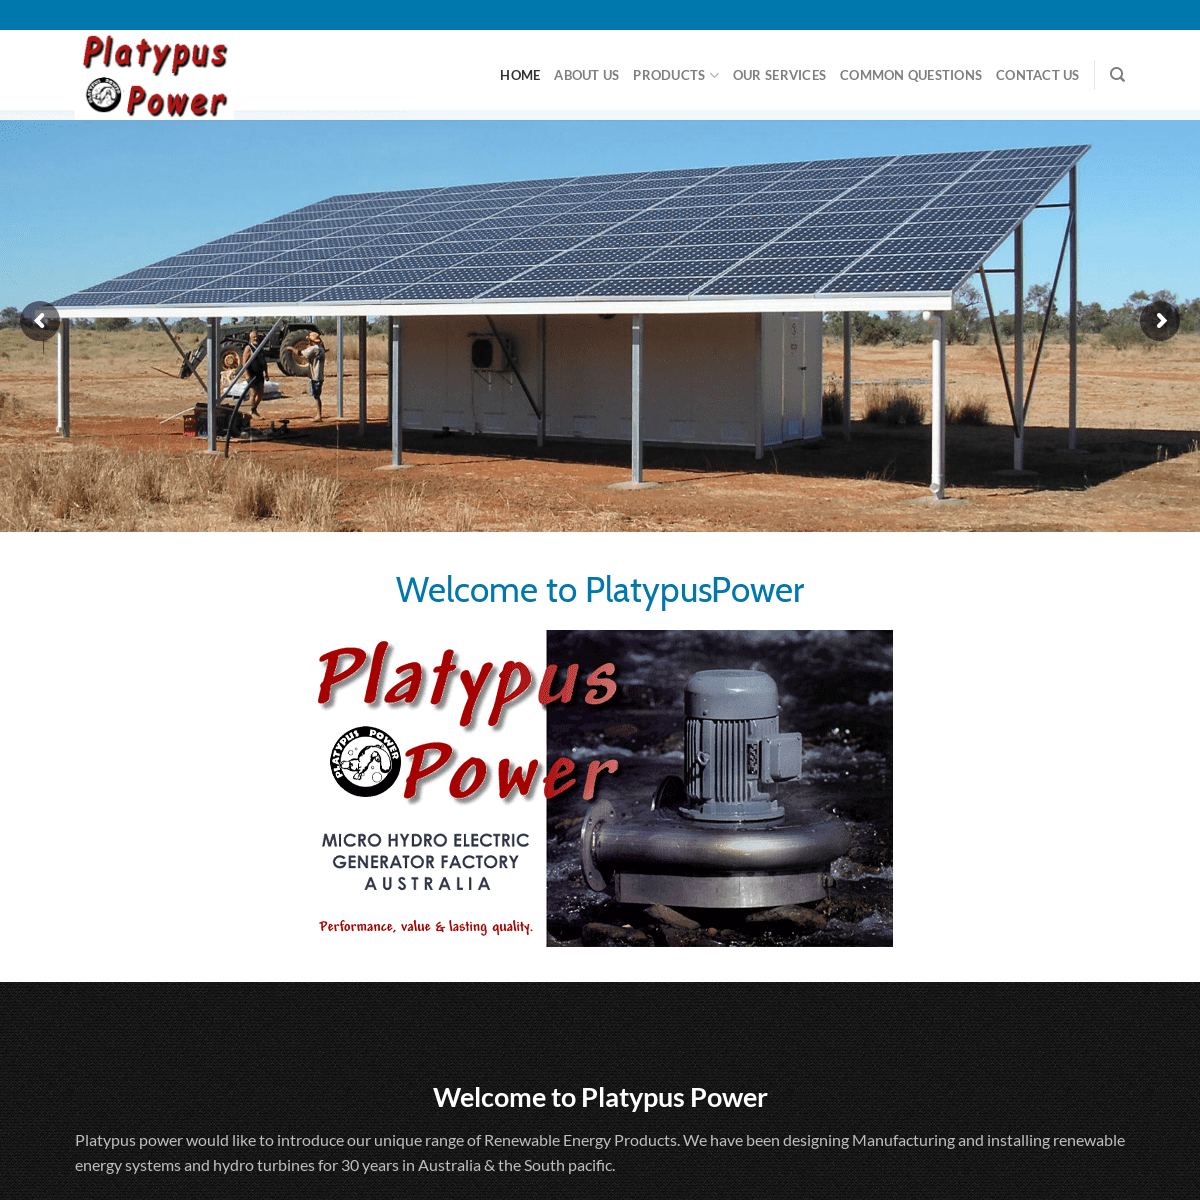 Platypus Power – Micro Hydro Electric Generator Factory